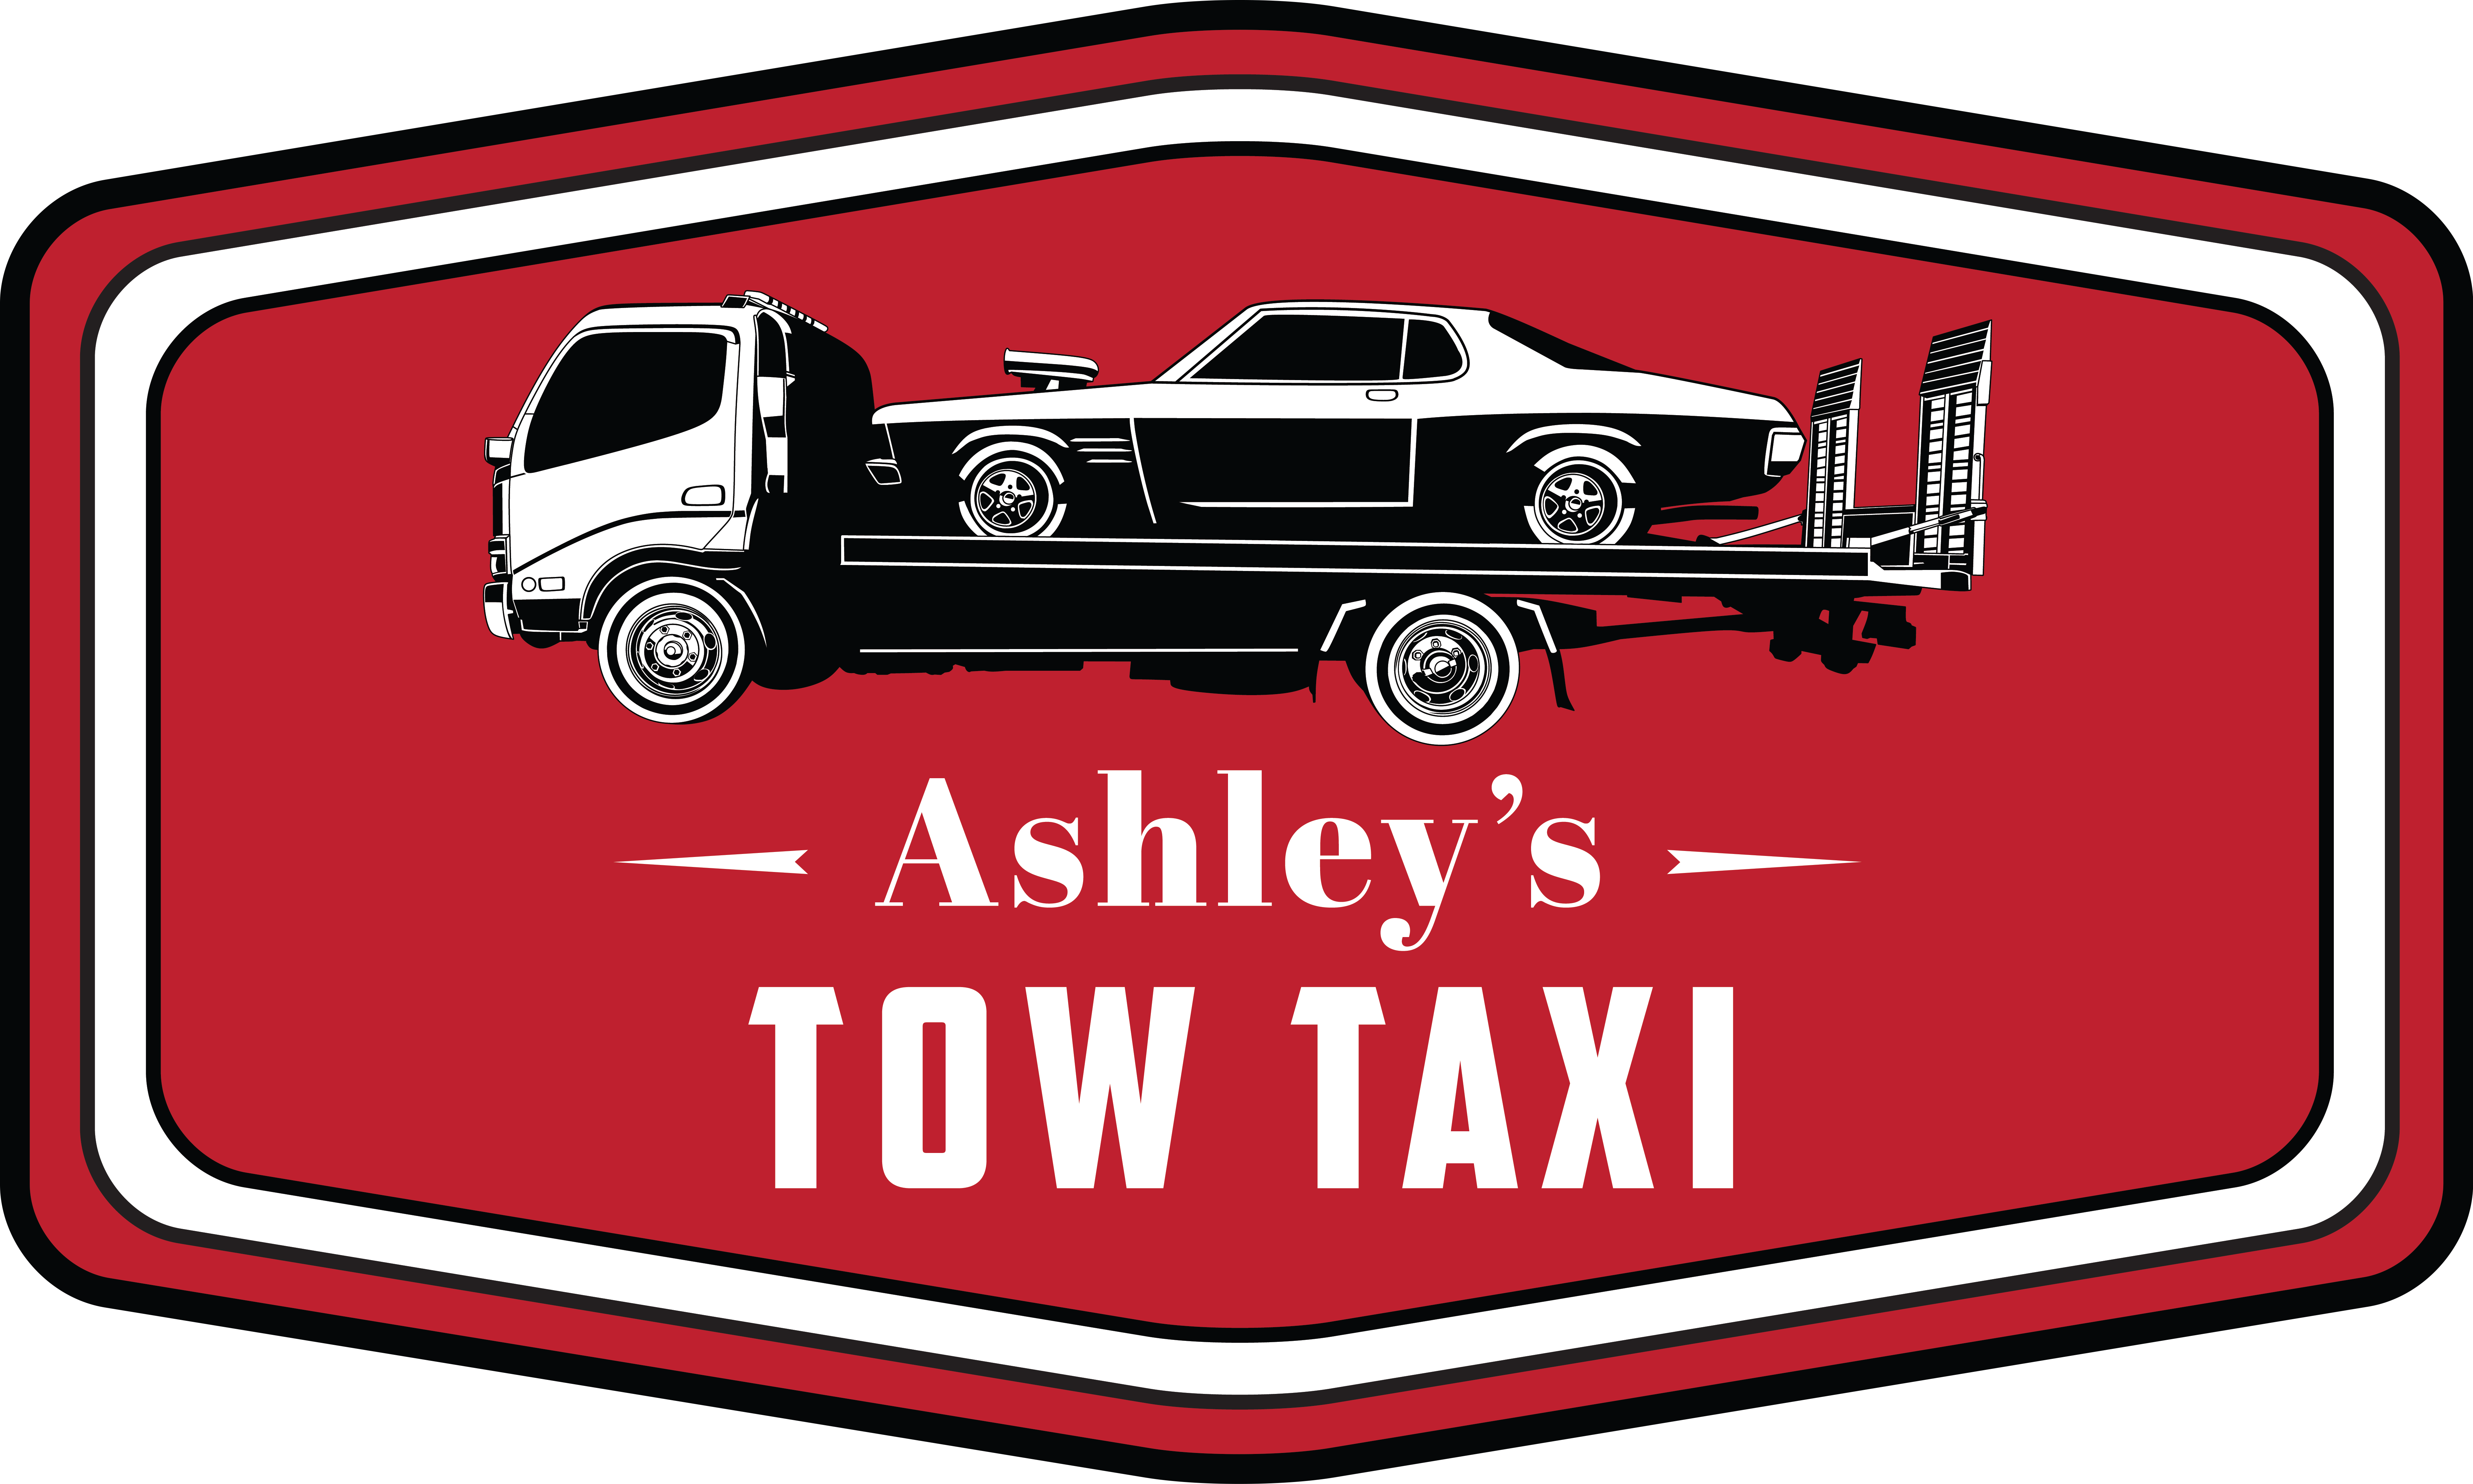 Ashley's Tow Taxi